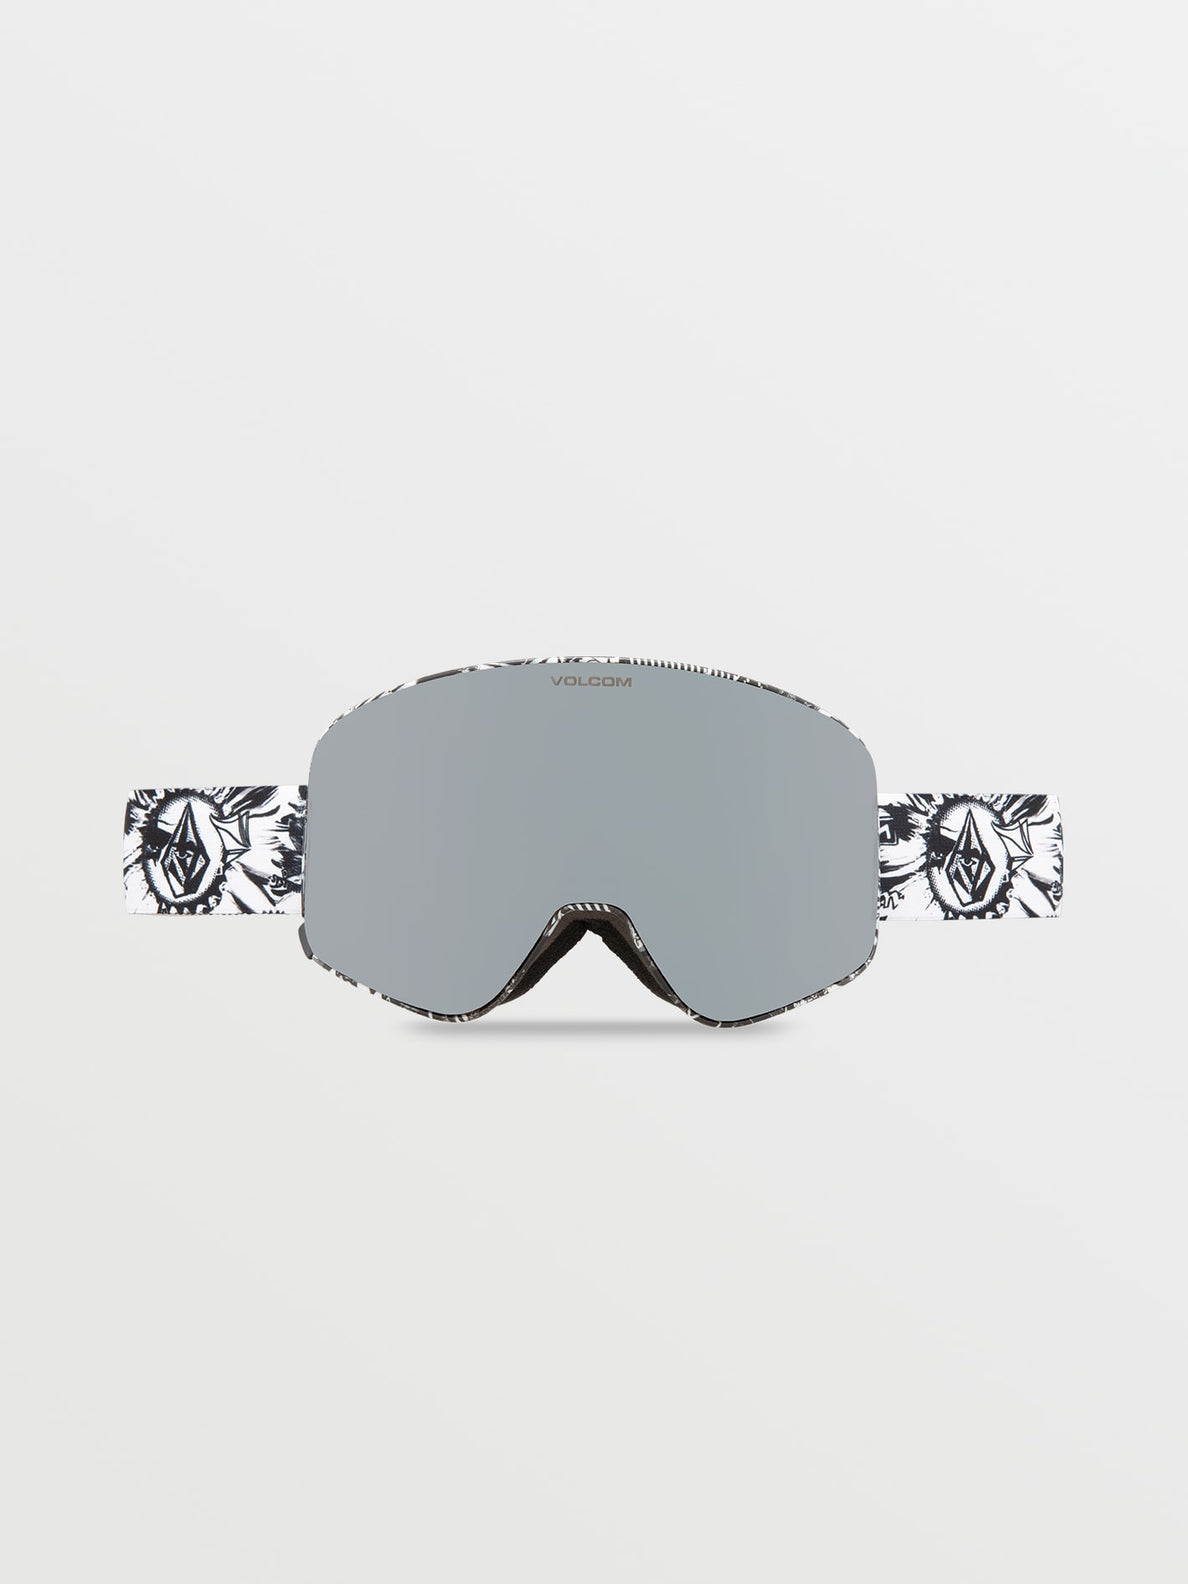 Odyssey Goggle with Bonus Lens - Op Art / Silver Chrome